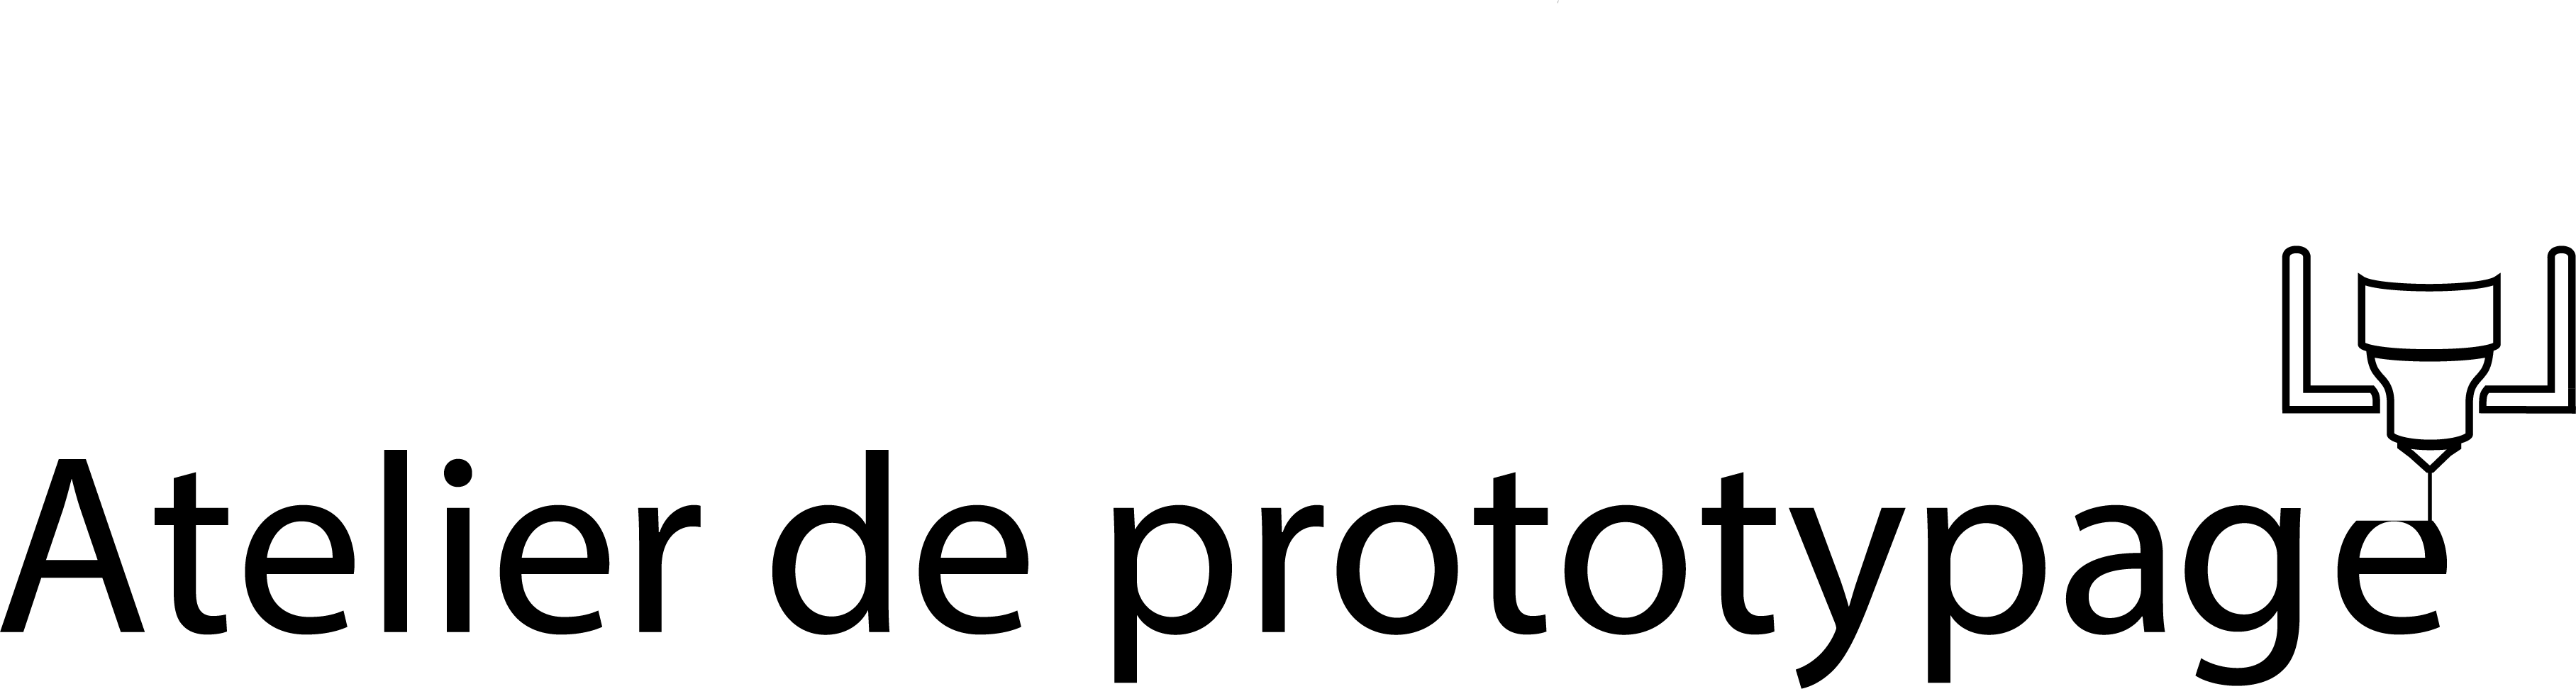 logo atelier de prototypage